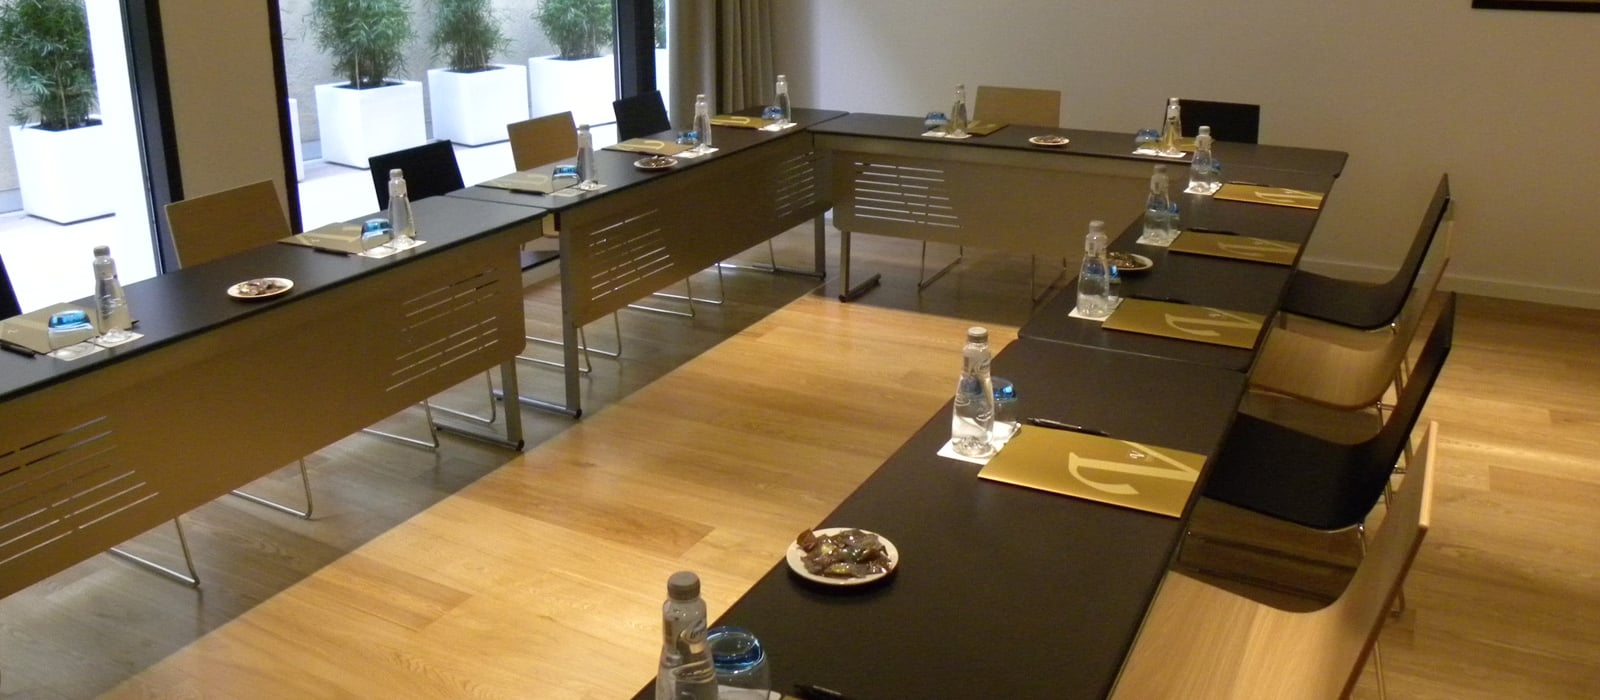 Services Hotel Barcelona Gala  - Vincci Hotels - Meeting Rooms